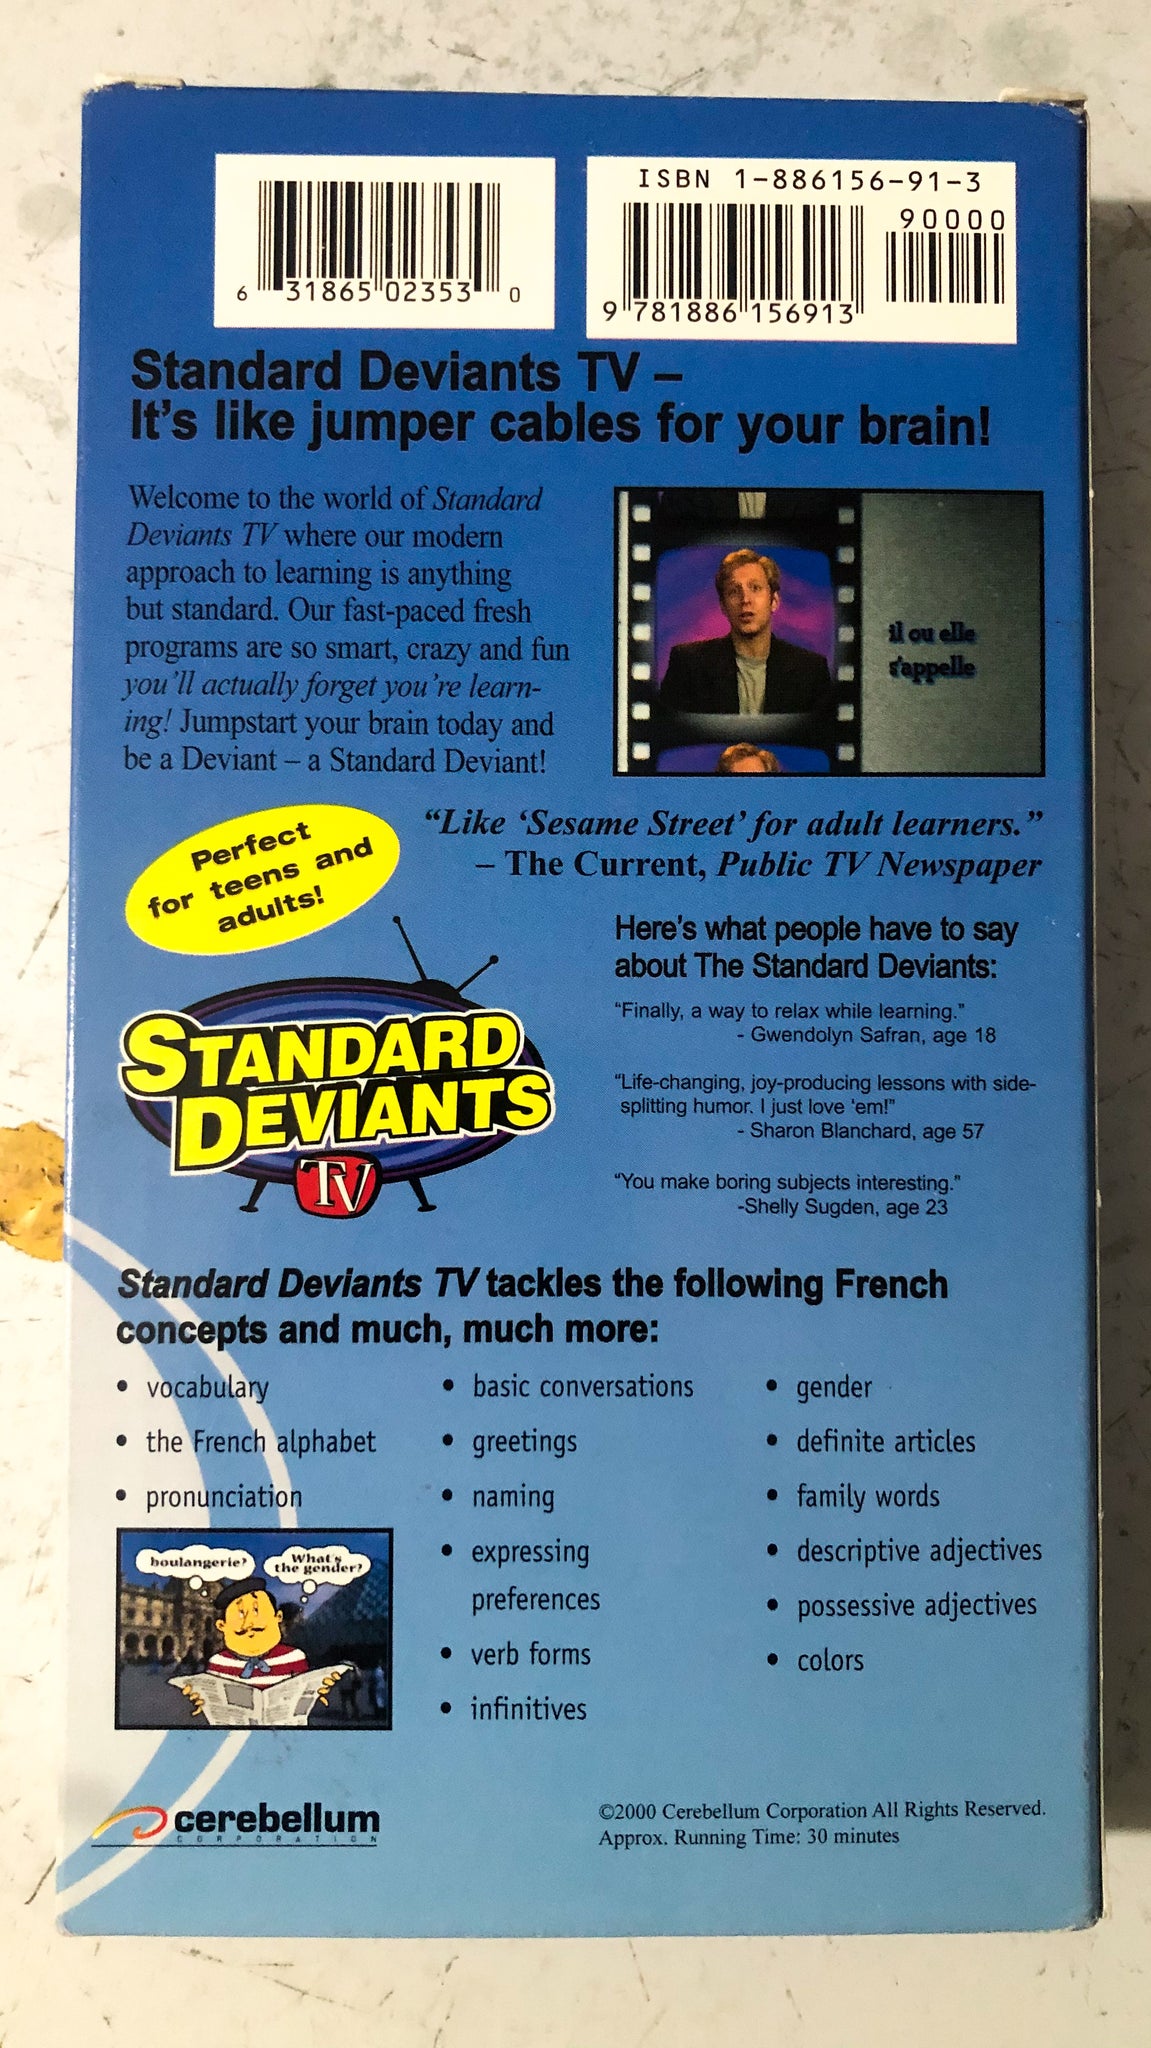 Standard Deviants TV: French